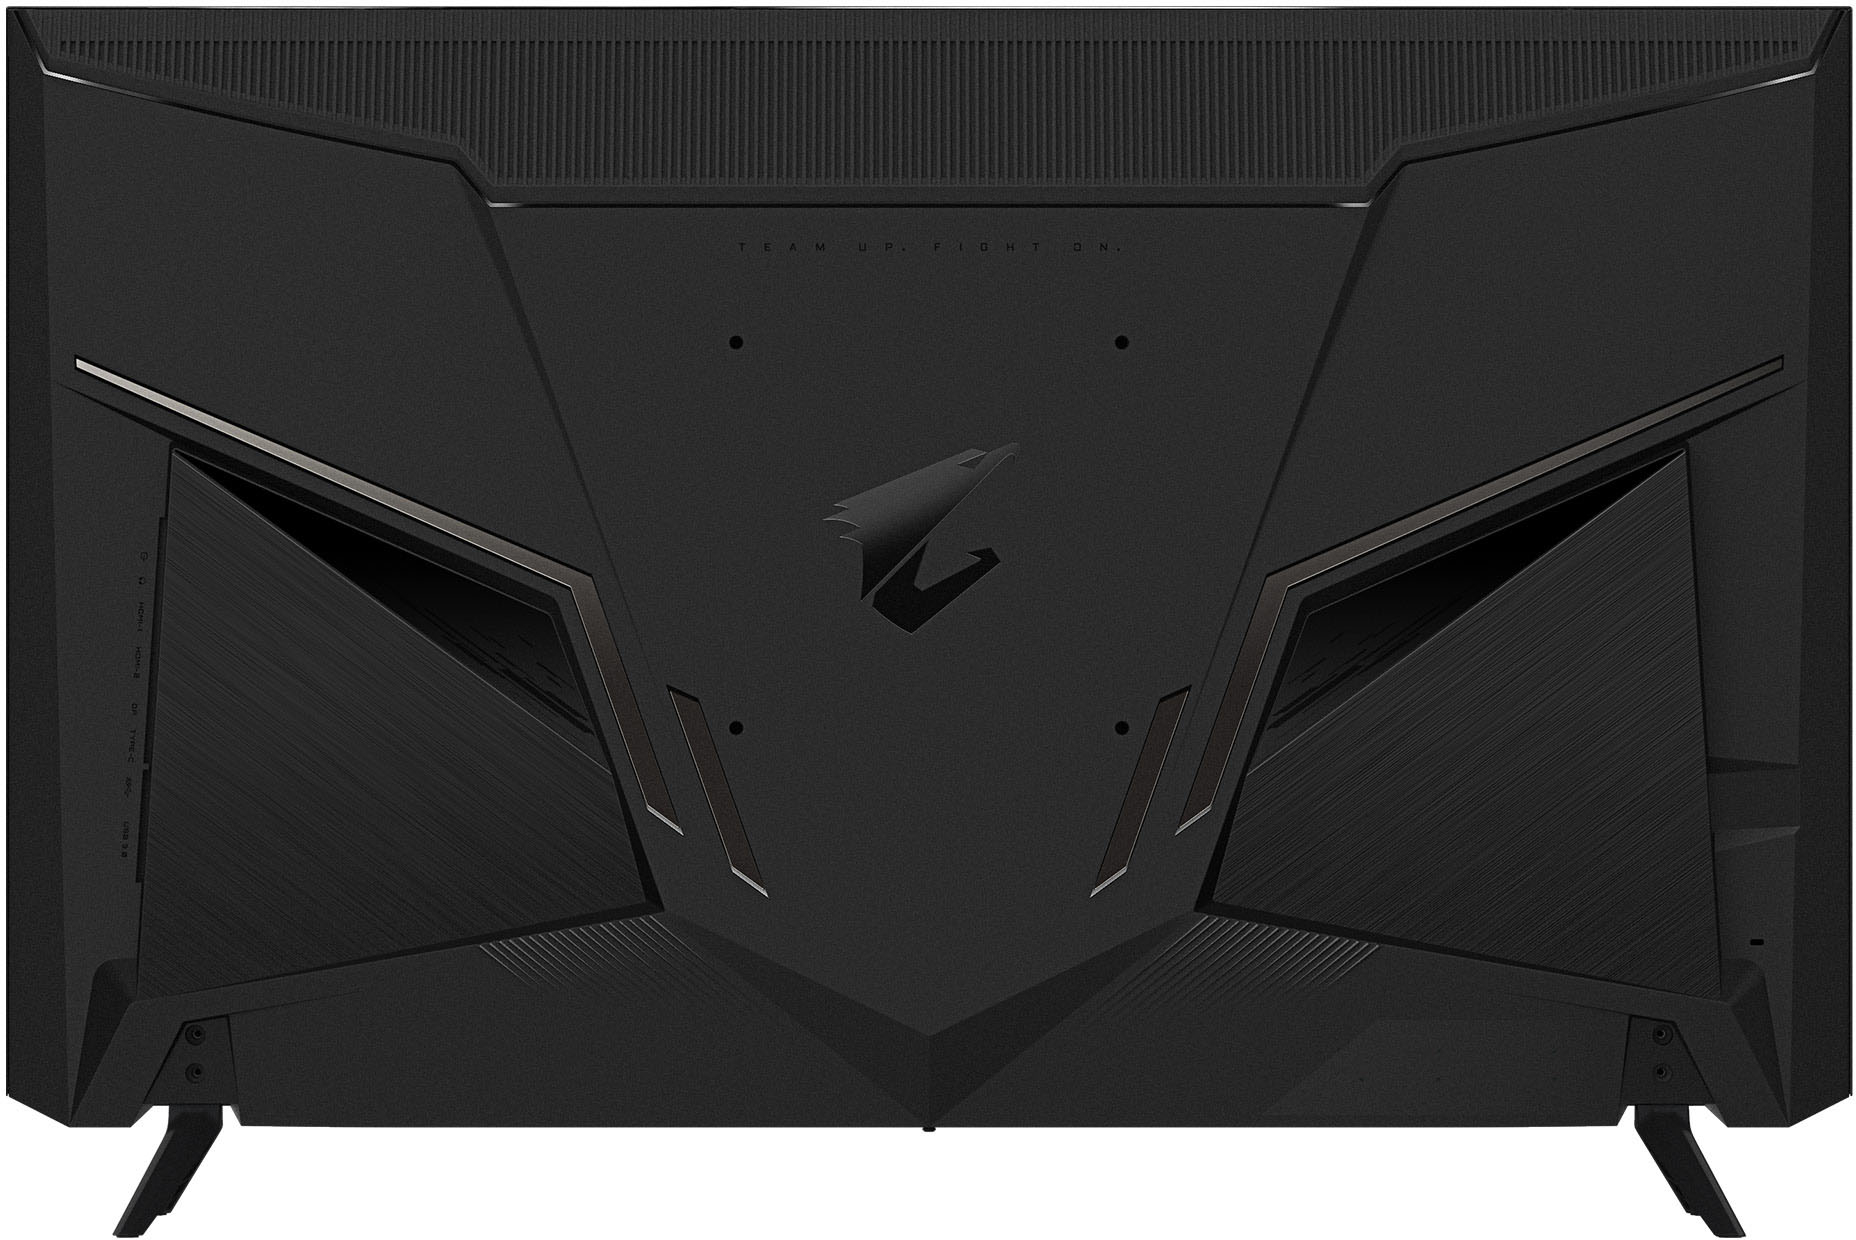 Back View: GIGABYTE - AORUS FV43U 43" LED 4K UHD FreeSync Premium Pro Gaming Monitor with HDR (HDMI, DisplayPort, USB) - Black